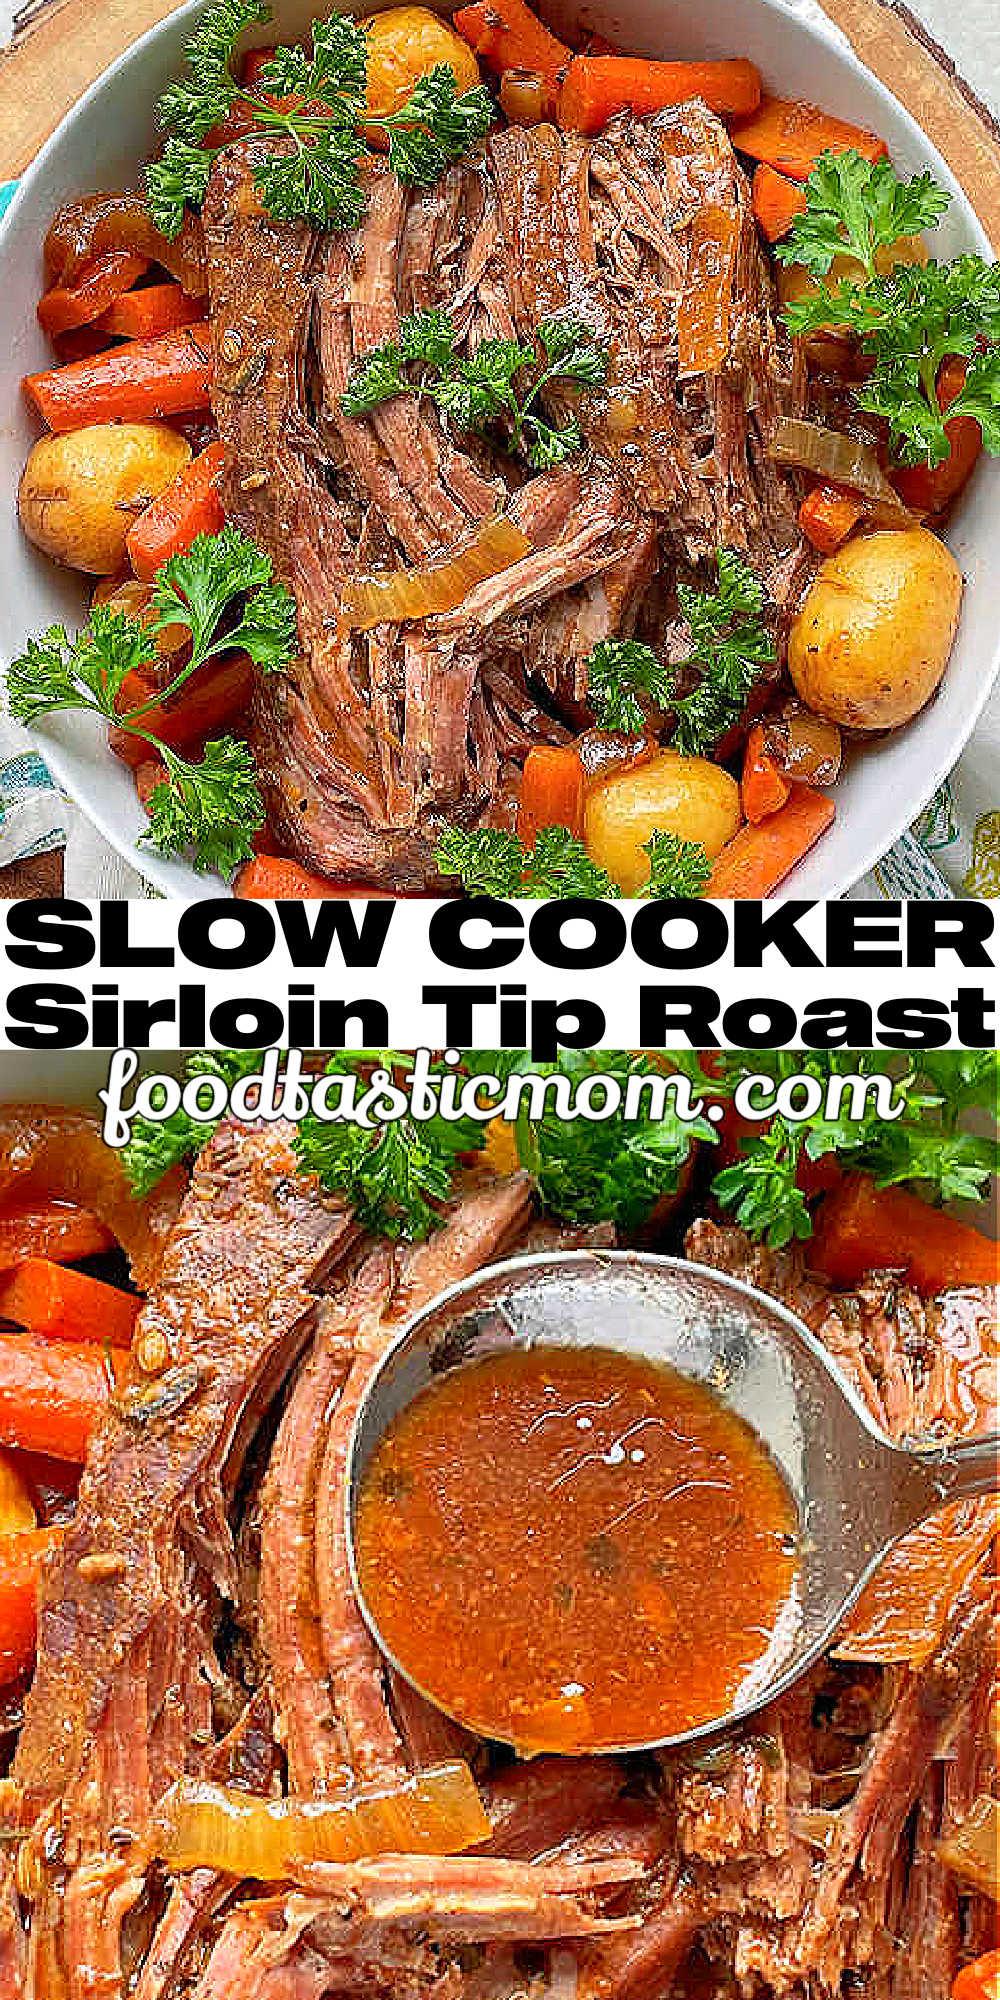 Slow Cooker Sirloin Tip Roast | Foodtastic Mom #slowcookerrecipes #sirlointiproast #potroast #beefstew via @foodtasticmom